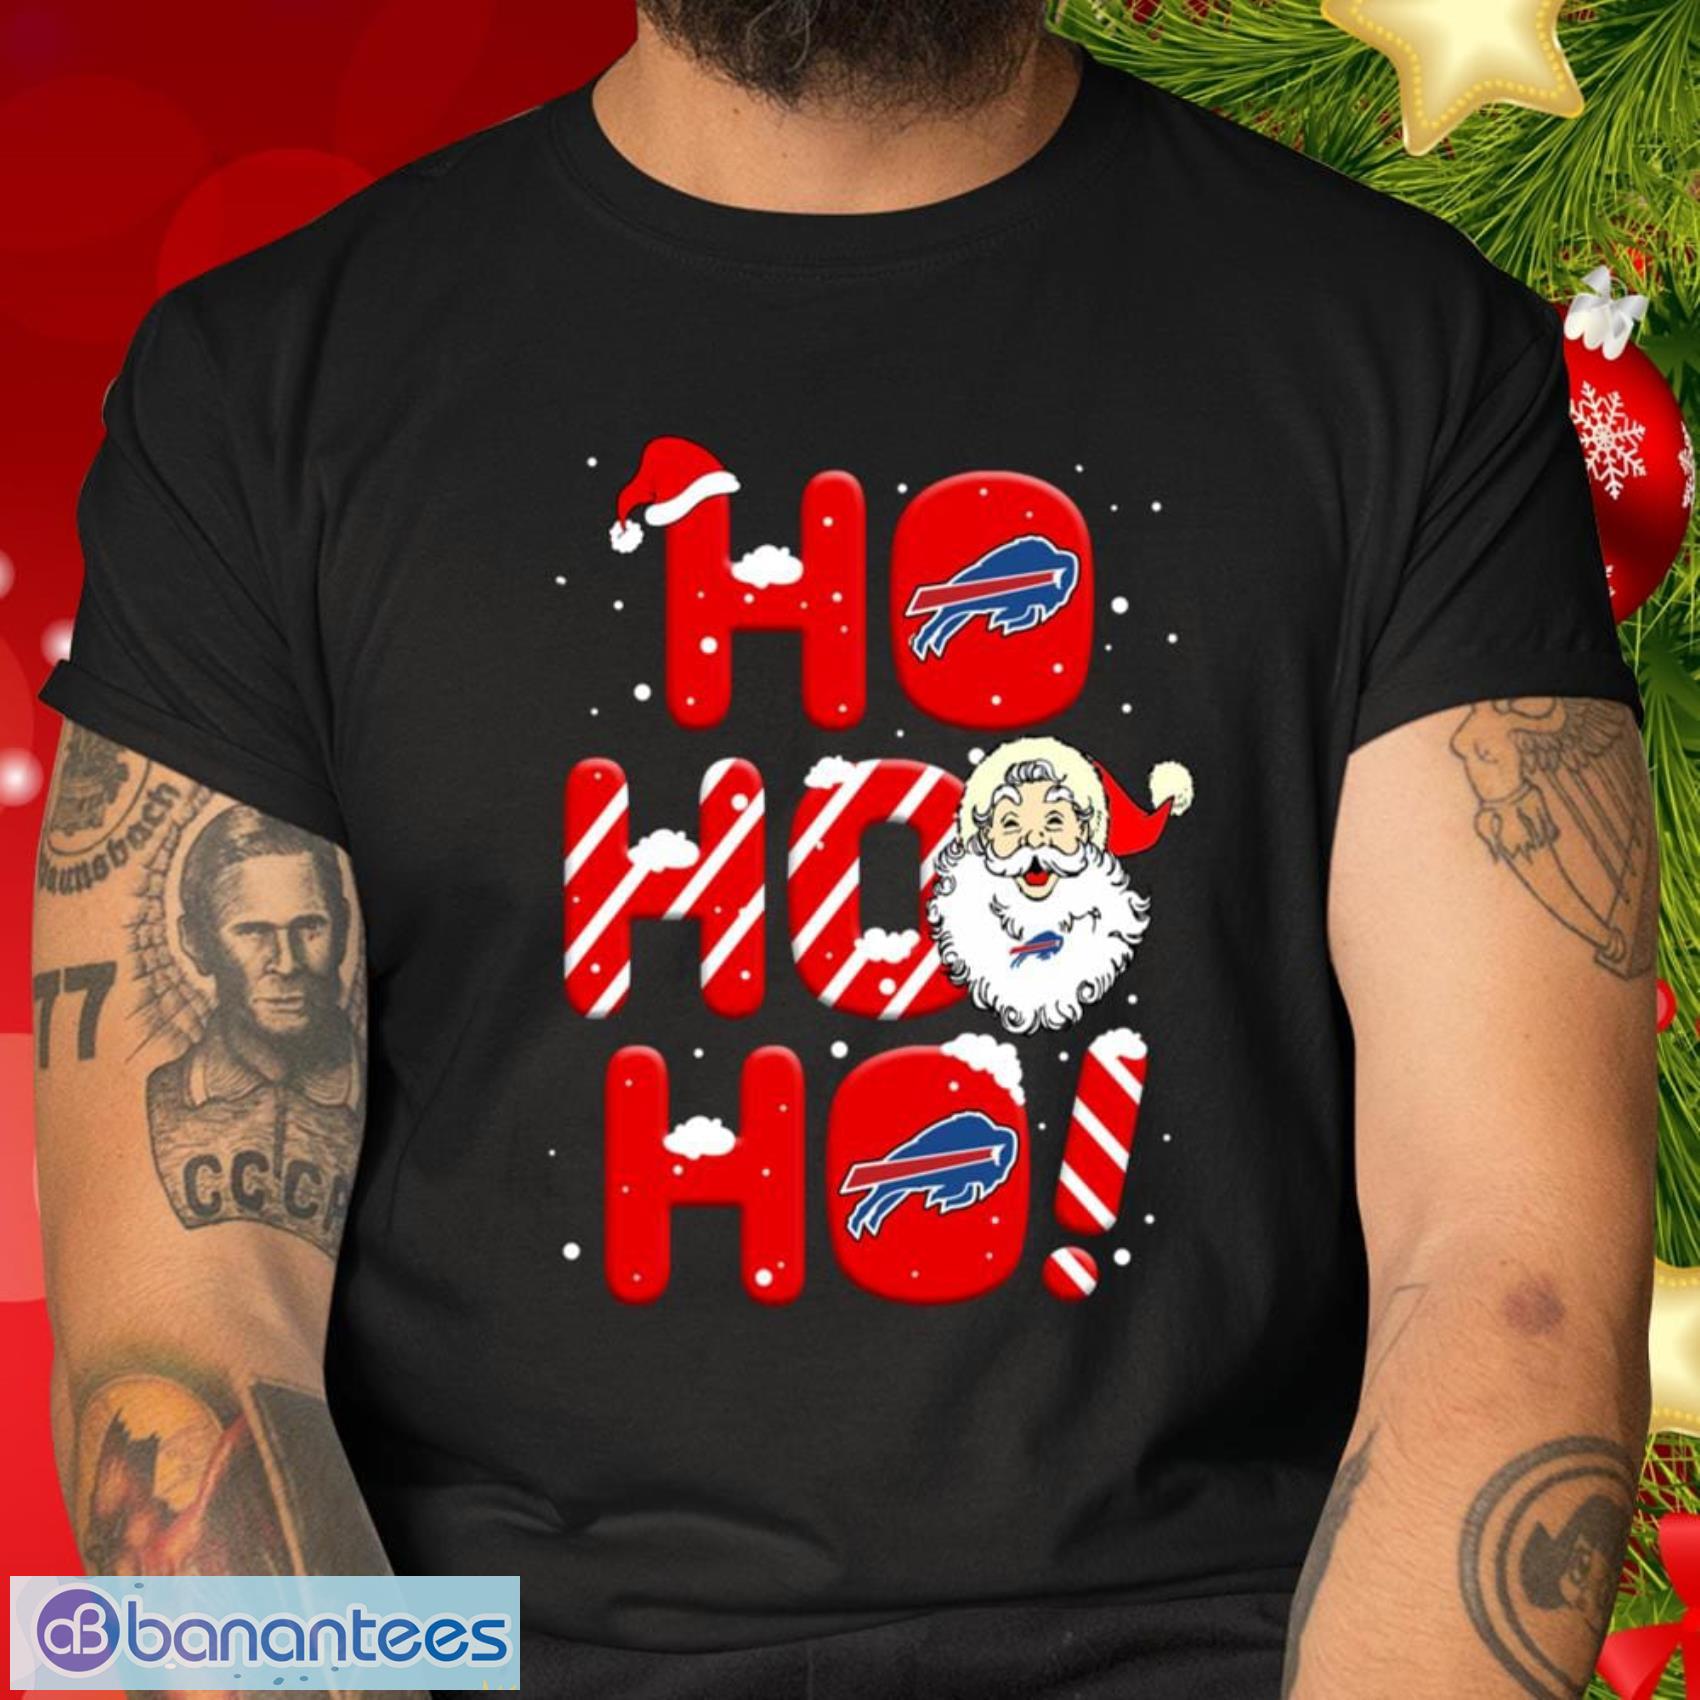 Buffalo Bills NFL Football Gift Fr Fans Ho Ho Ho Santa Claus Merry Christmas Shirt T Shirt - Buffalo Bills NFL Football Ho Ho Ho Santa Claus Merry Christmas Shirt T Shirt_1